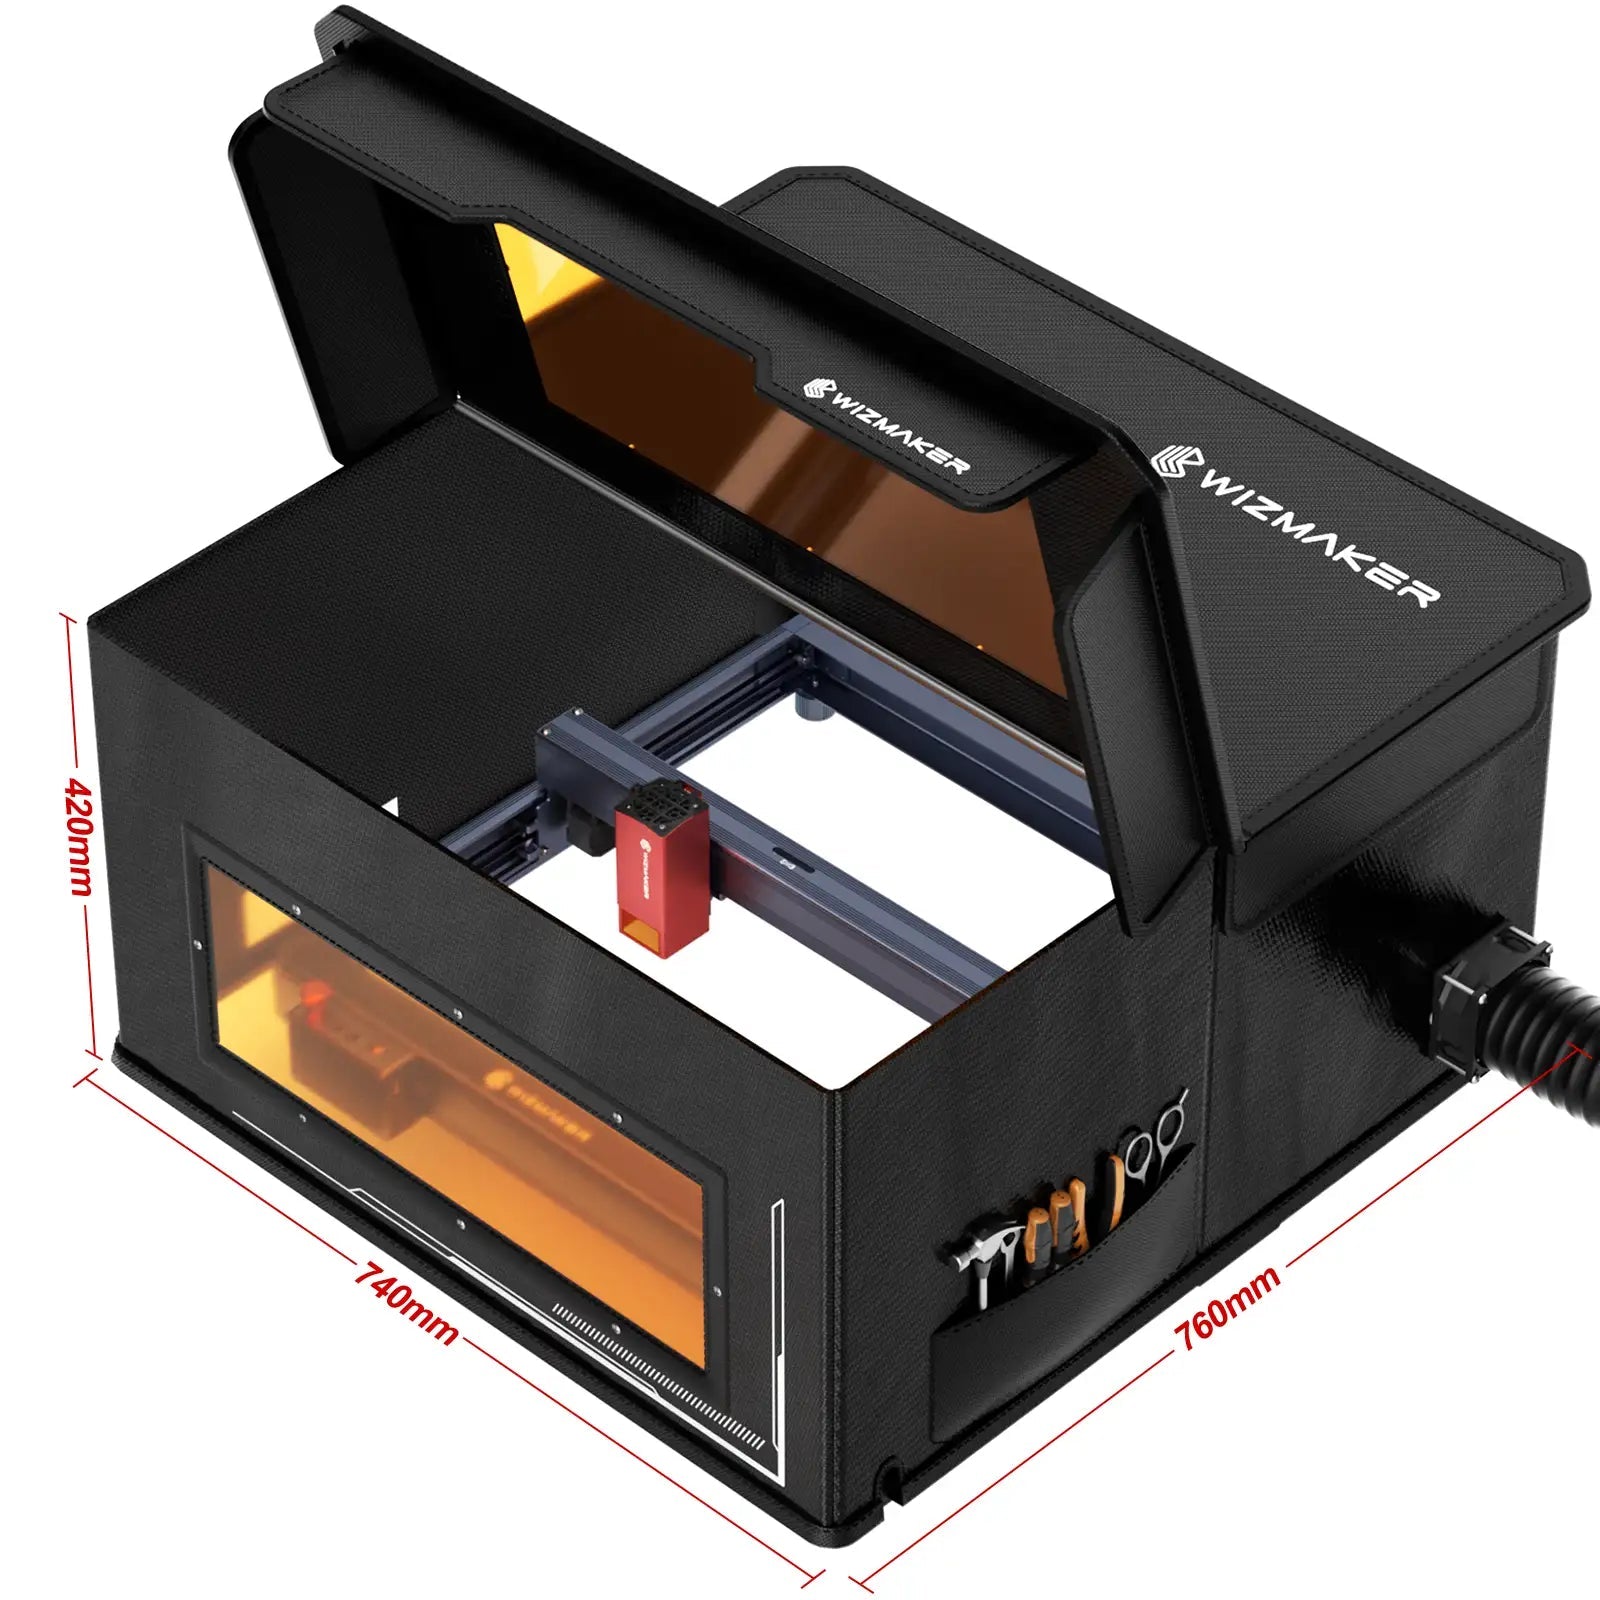 WIZMAKER Enclosure Foldable Dust-Proof Cover for Most Laser Engravers WIZMAKER 